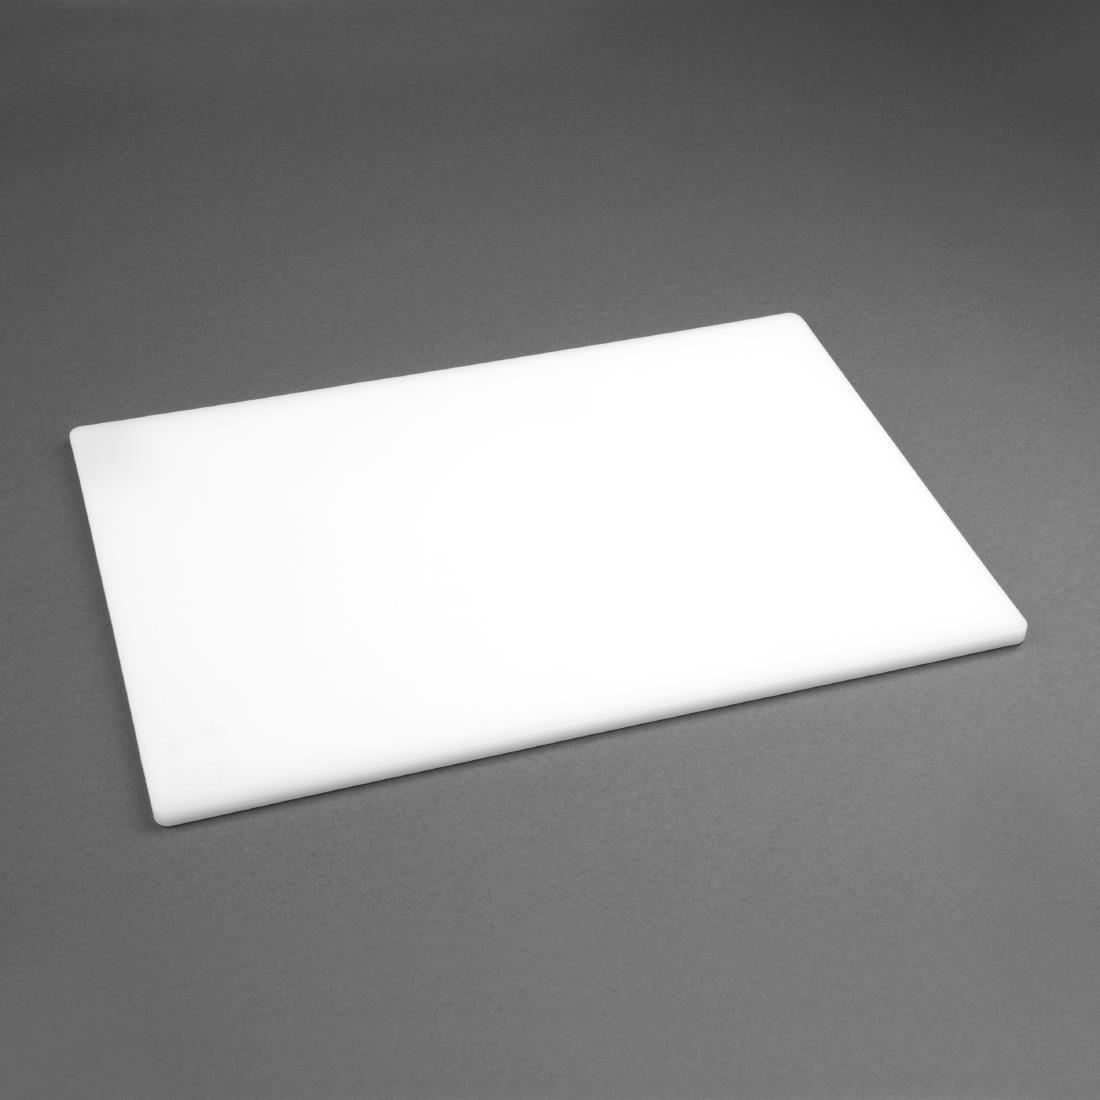 Hygiplas Low Density White Chopping Board Standard - J252  - 1